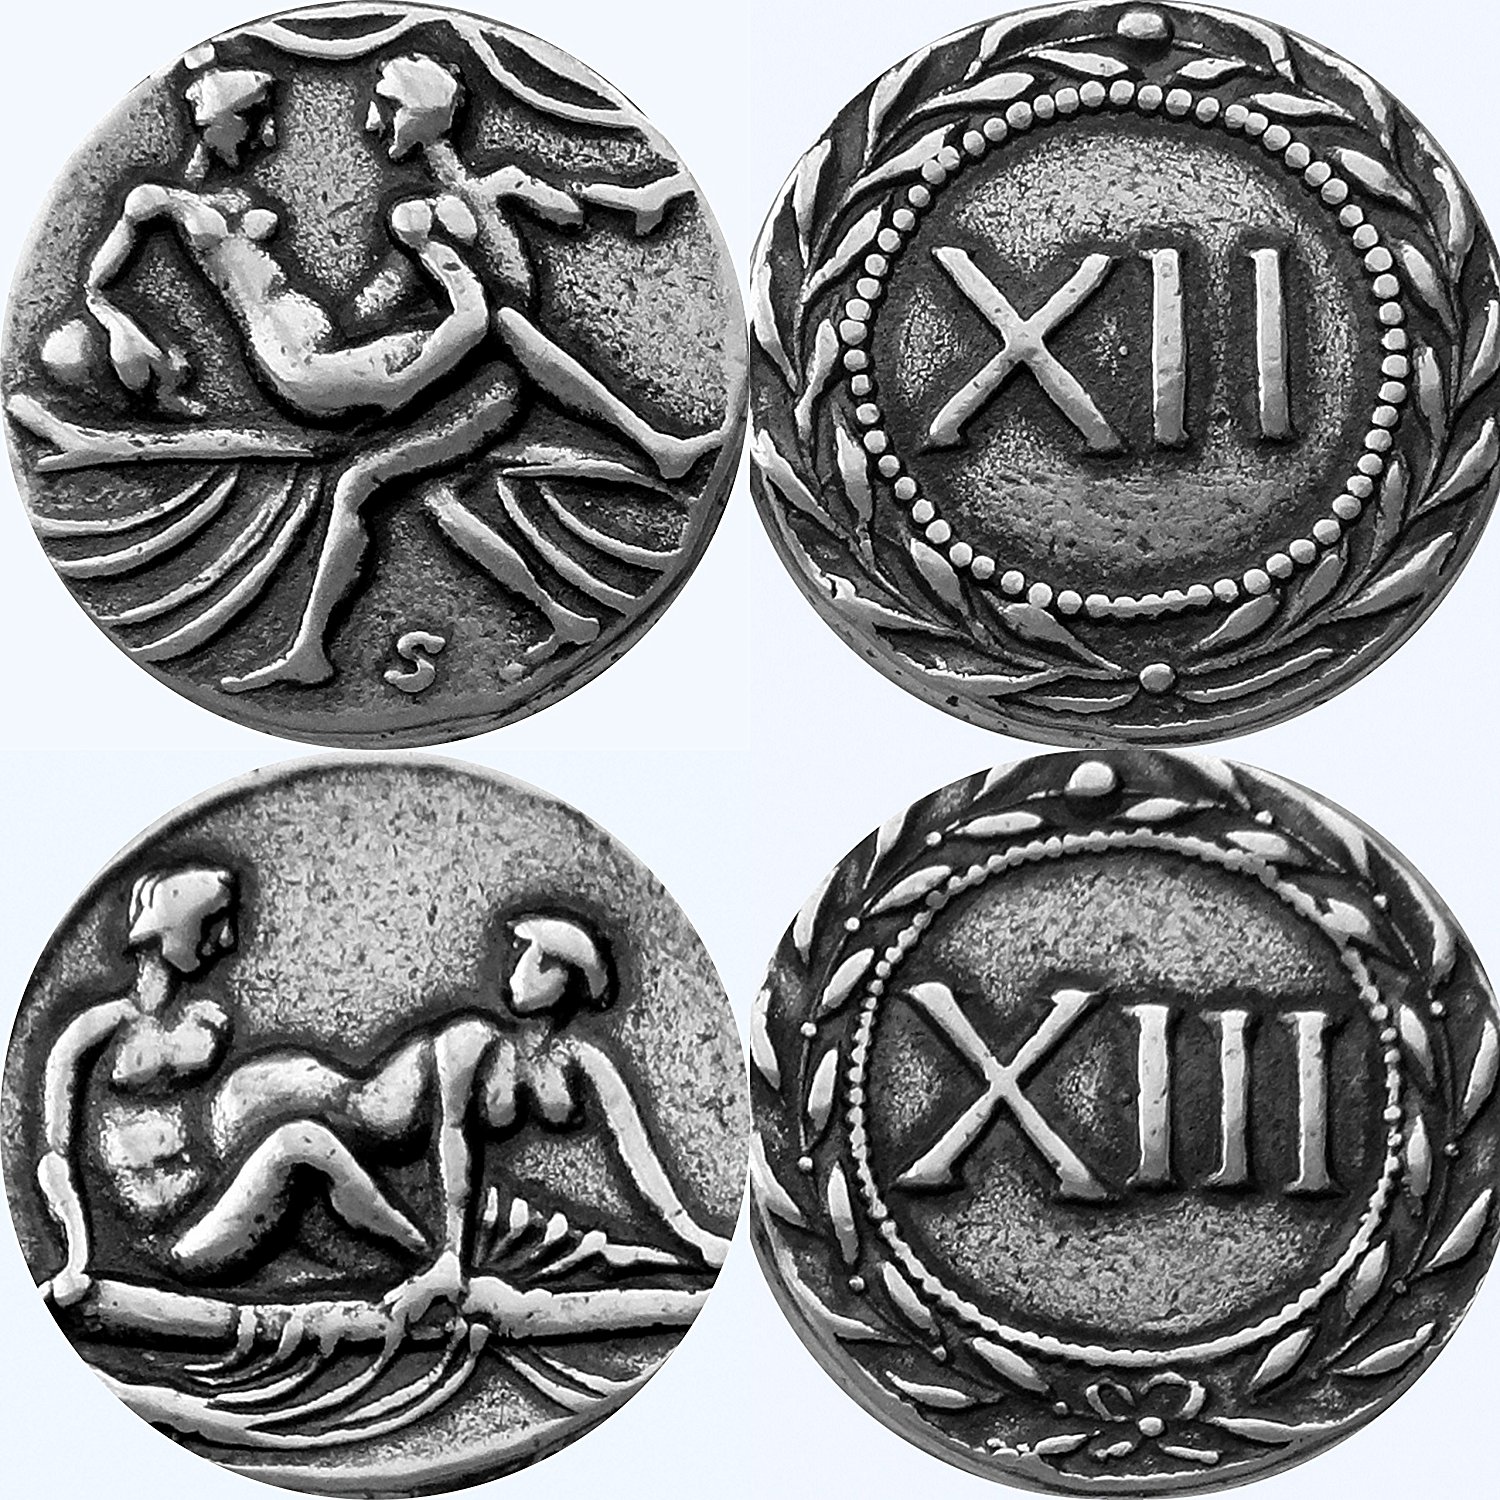 Ancient roman coins called Spintria.